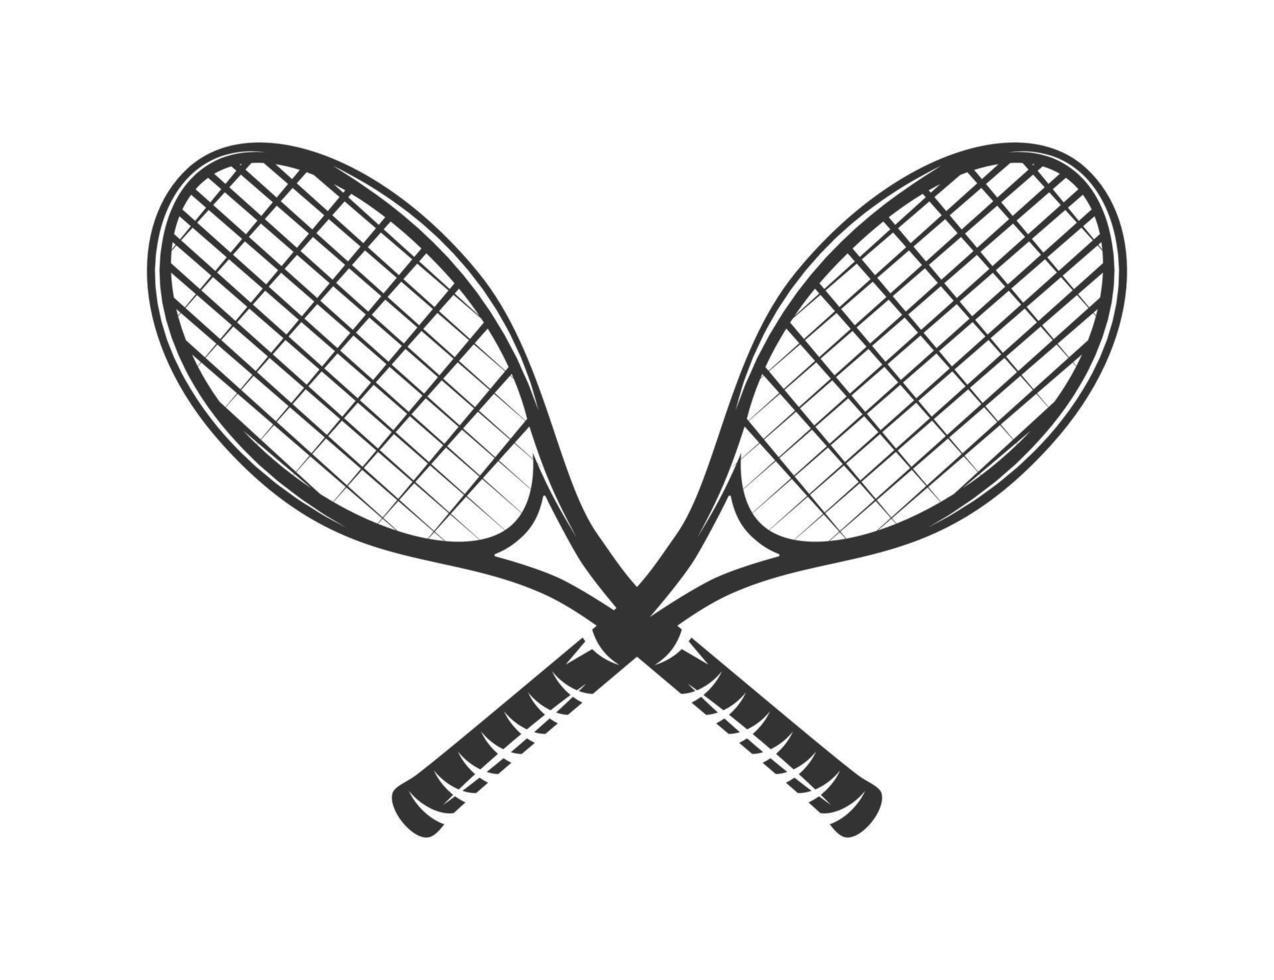 raquetes de tênis isoladas no fundo branco vetor